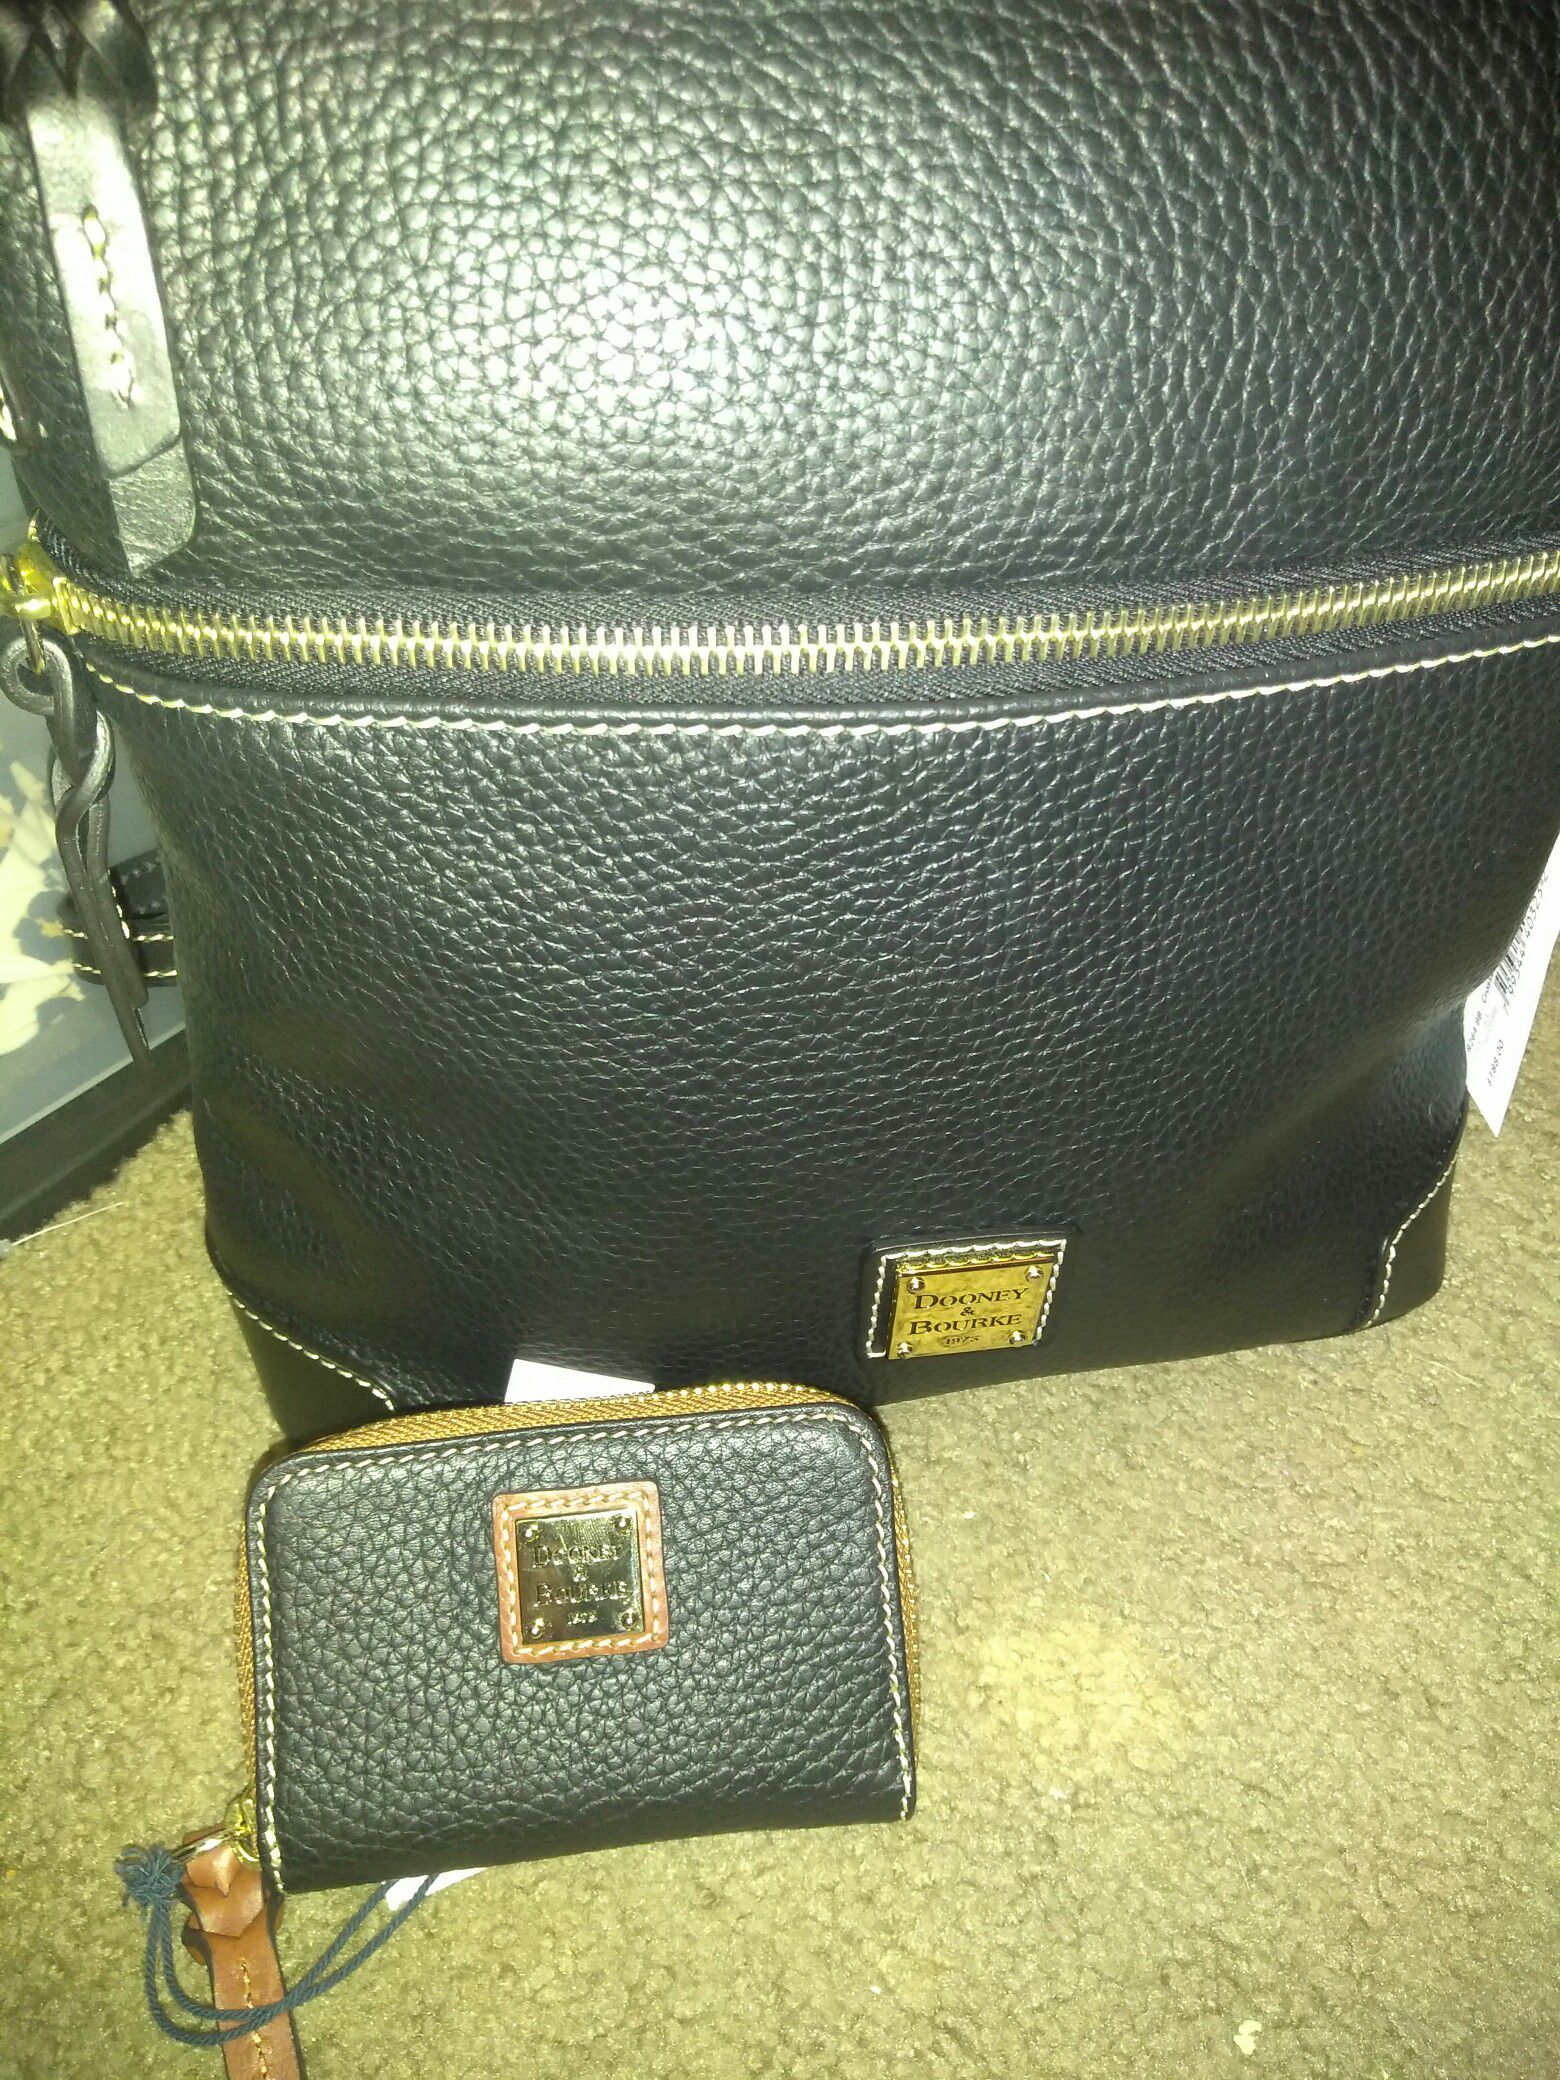 Dooney purse and wallet set